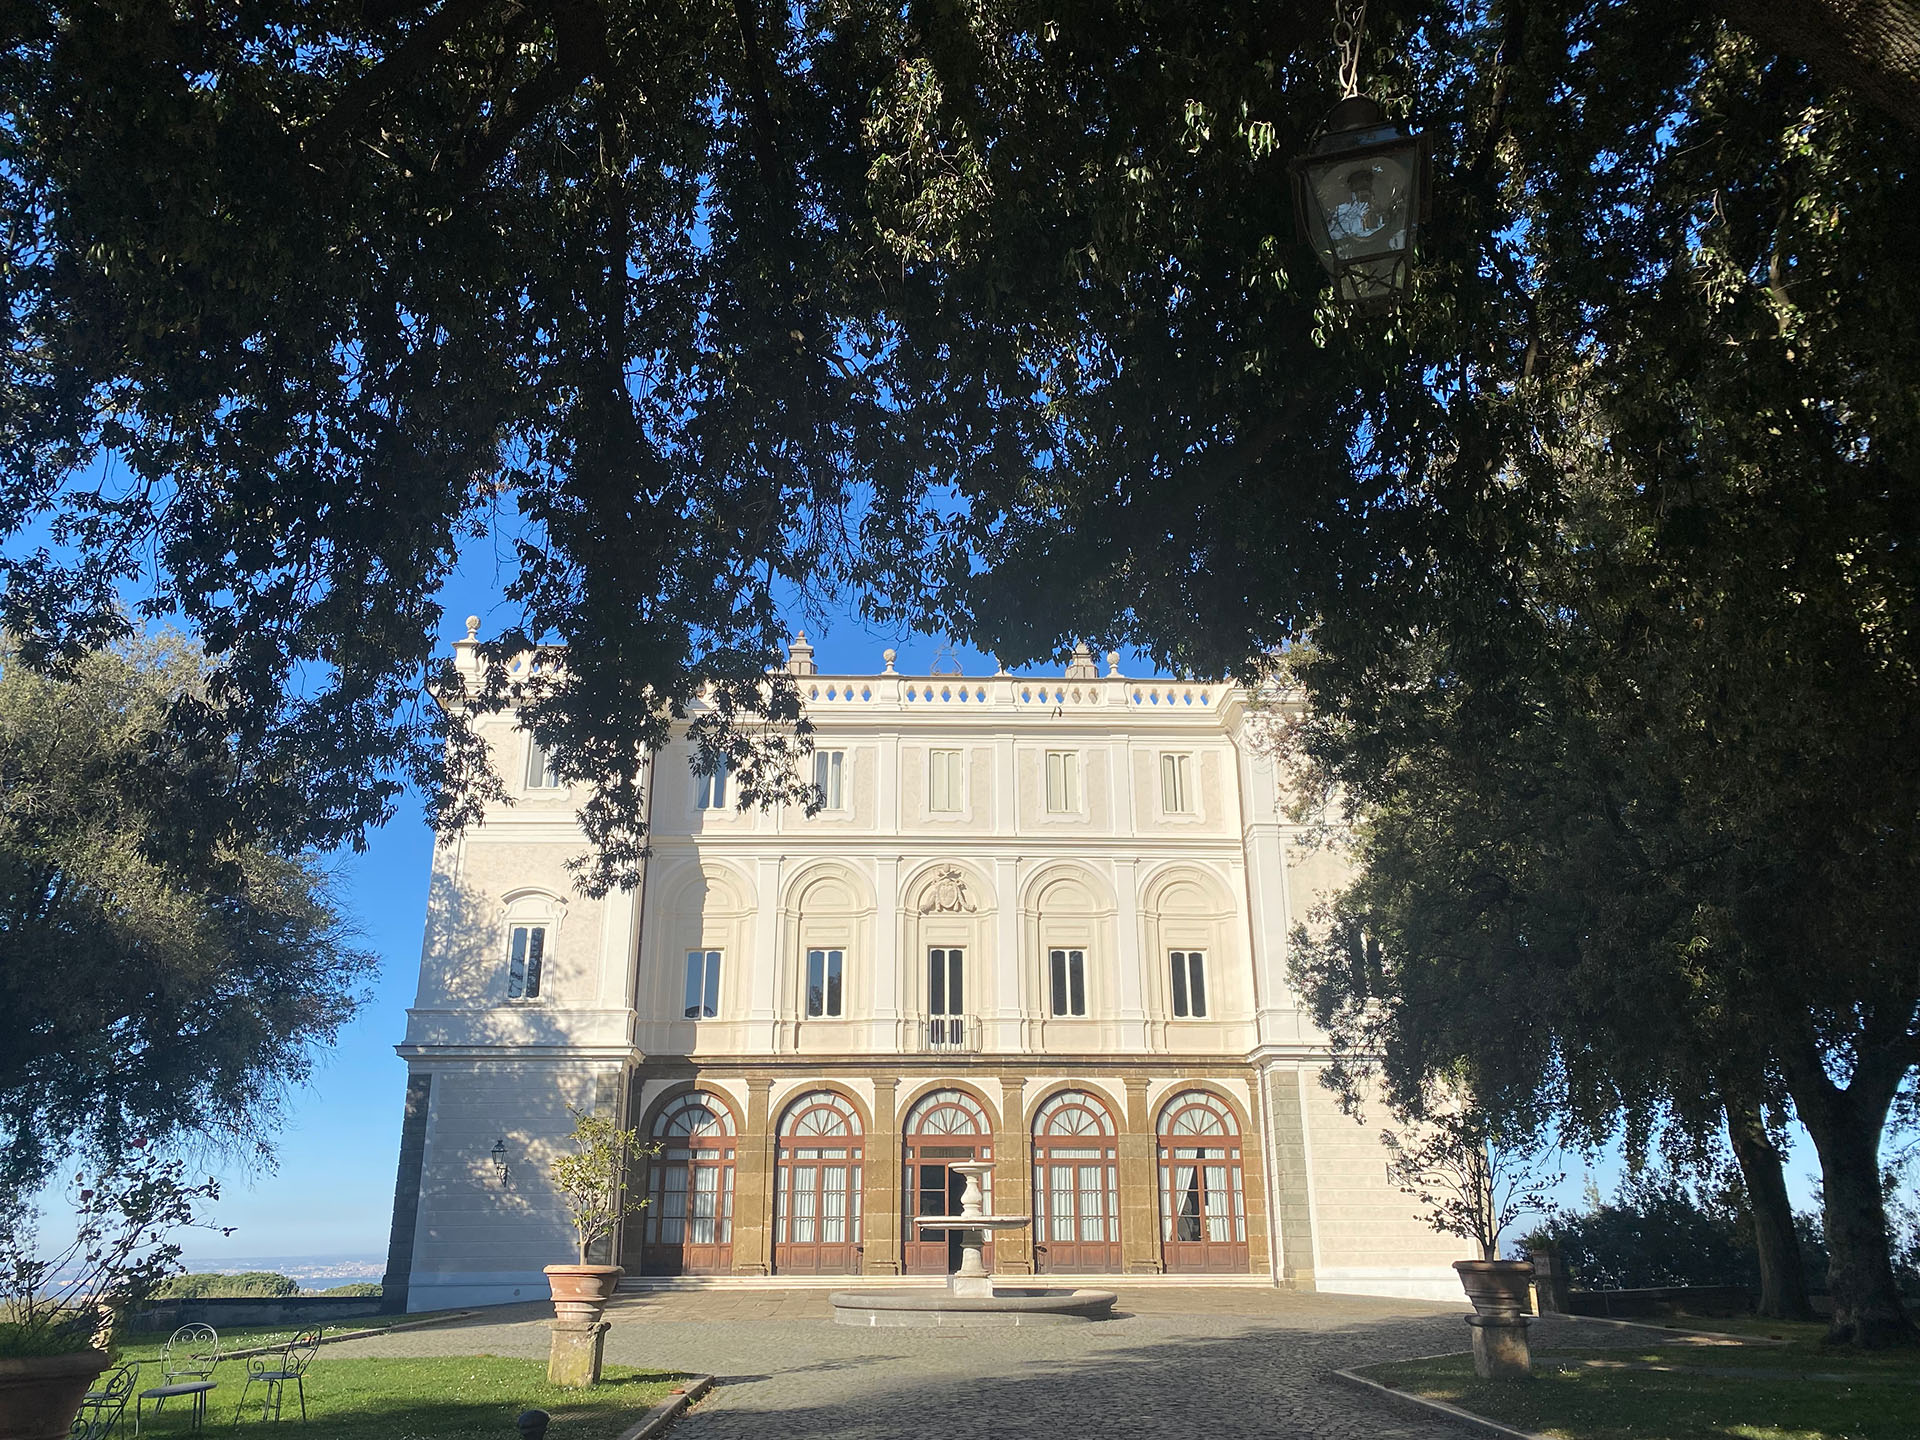 Soulidays, Villa Grazioli, Roma, sede del corso "The Body" con Marla Francis